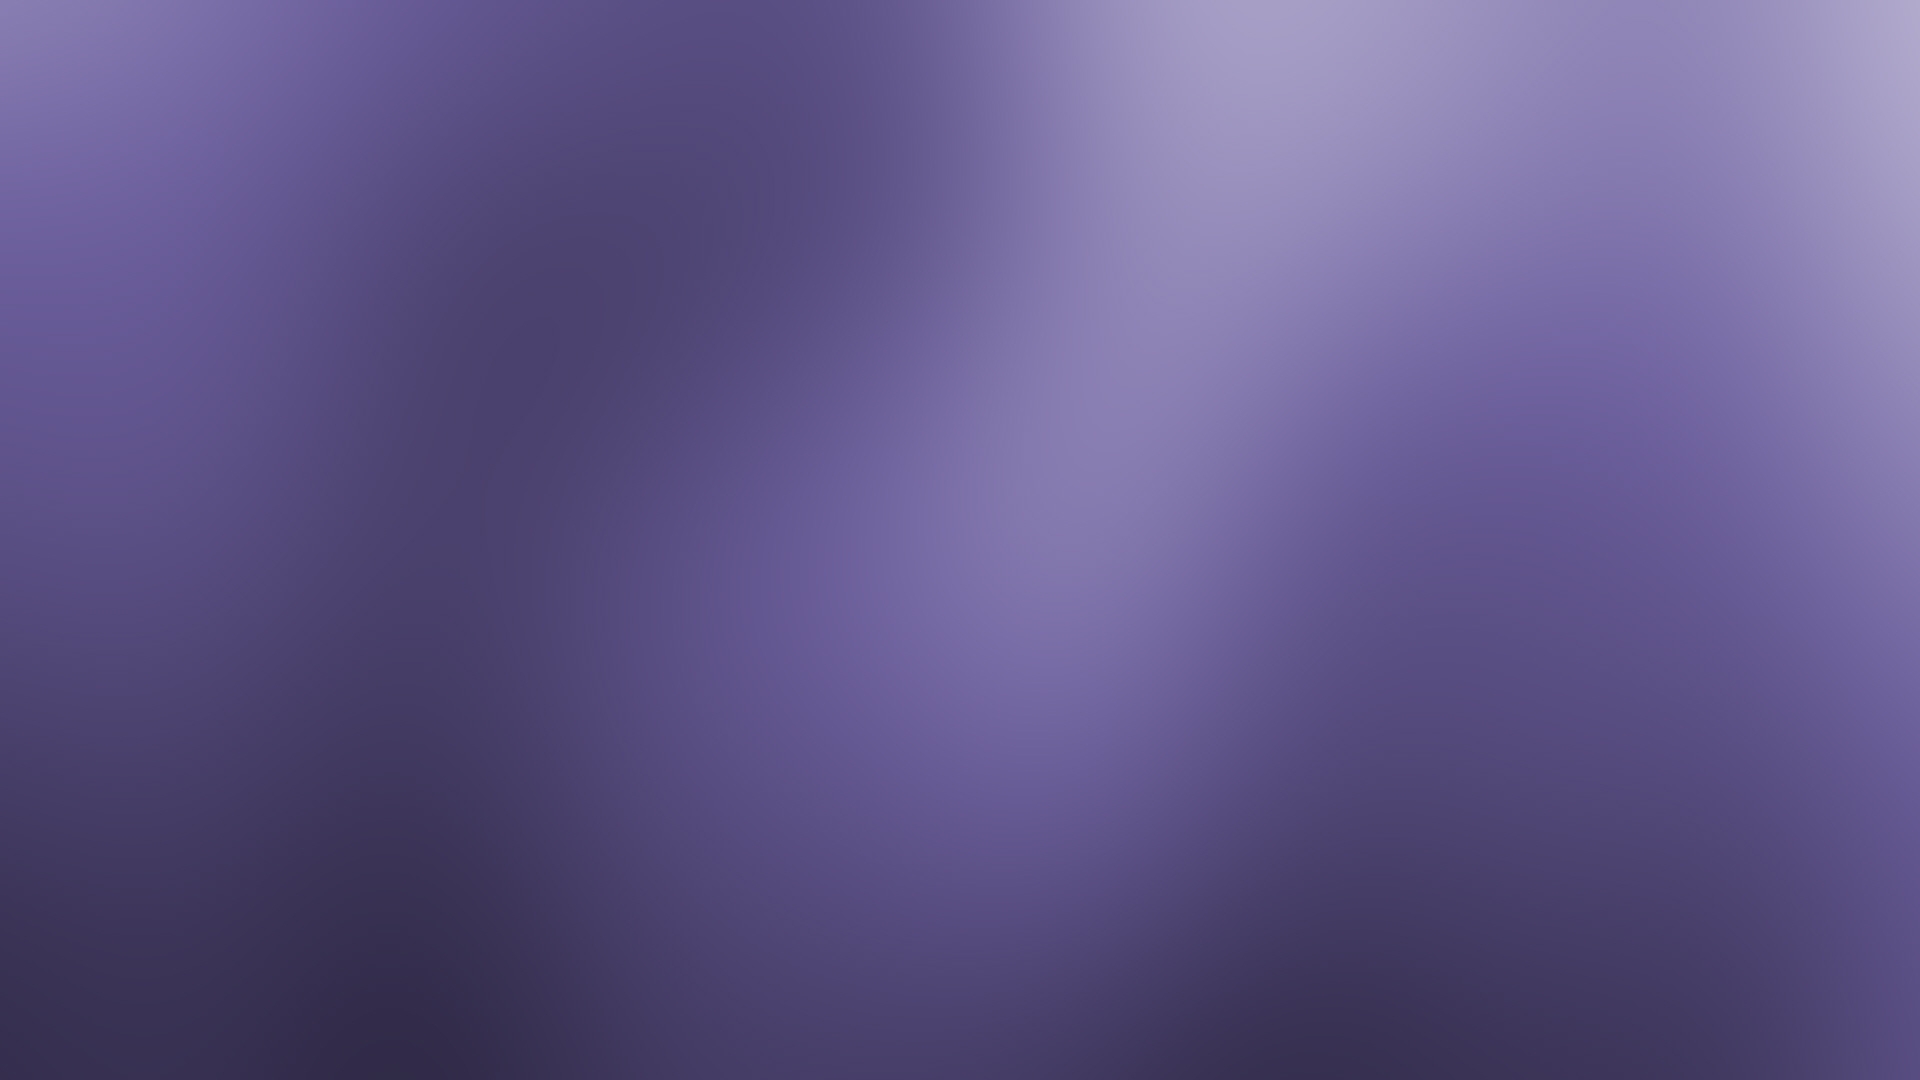 Download Wallpaper 1920x1080 purple black background